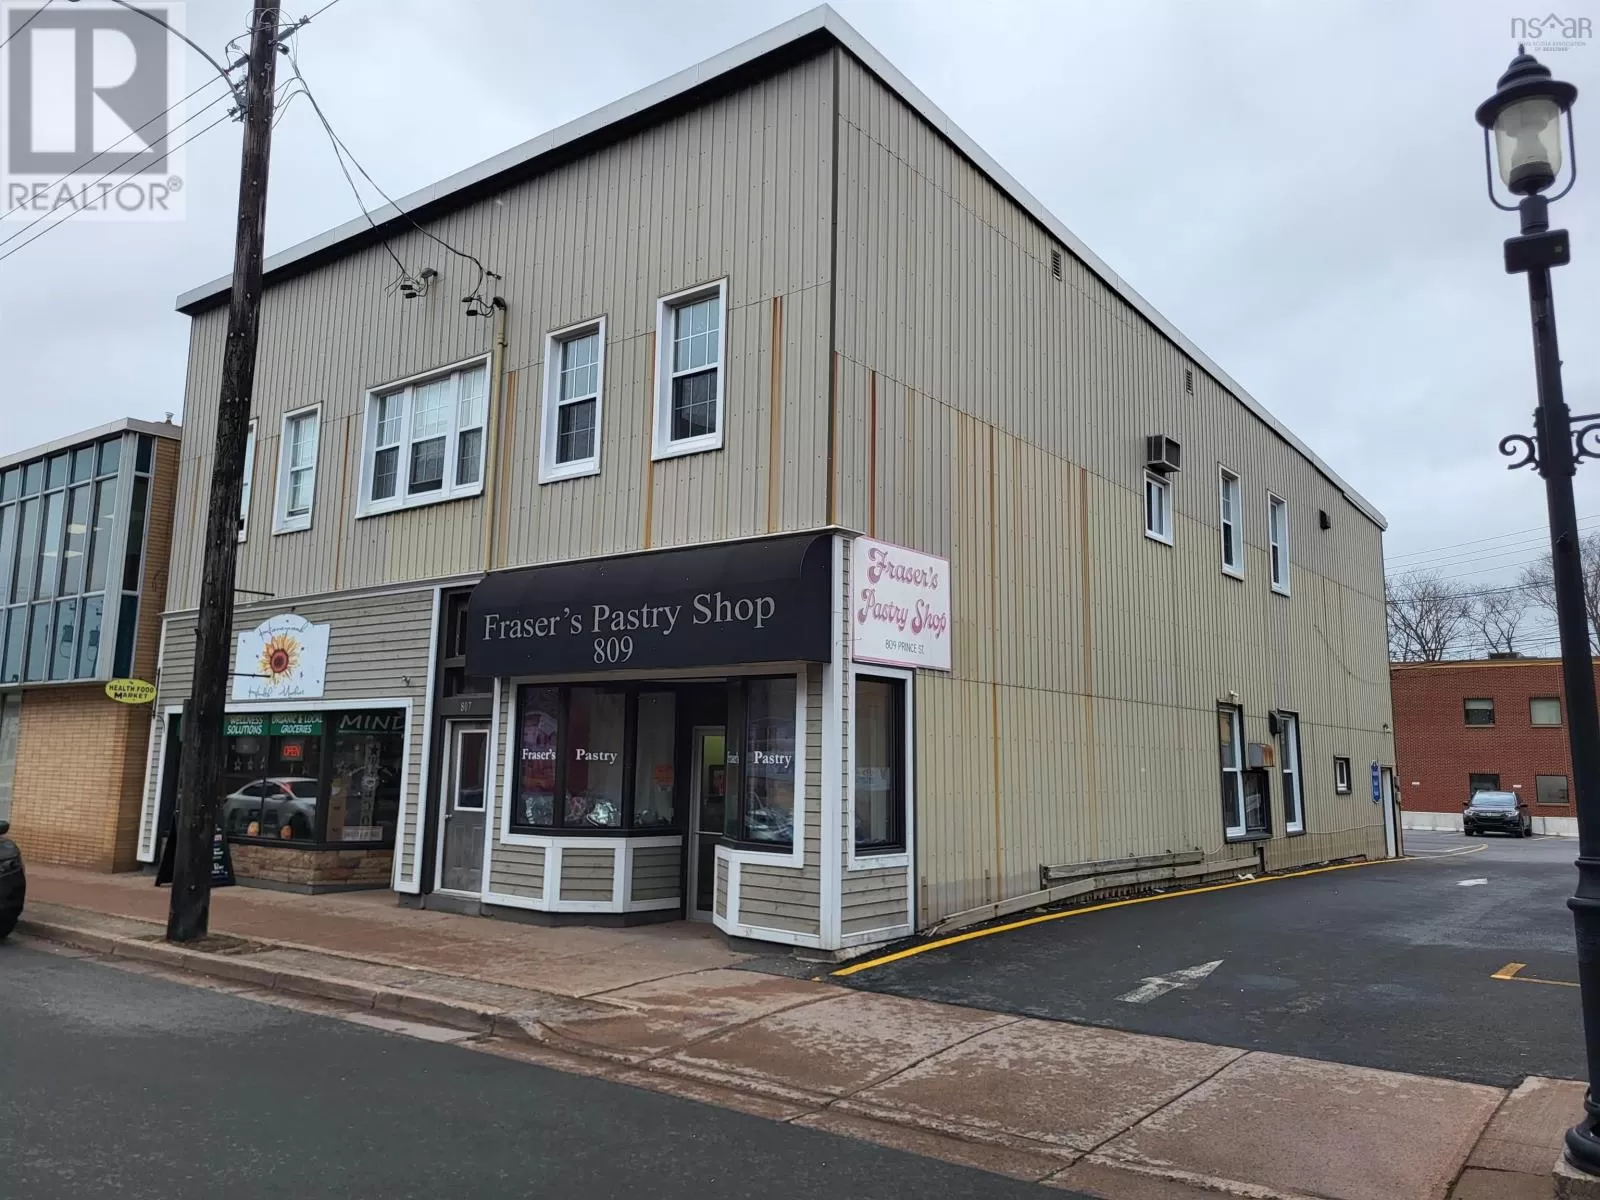 Fourplex for rent: 805-809 Prince Street, Truro, Nova Scotia B2N 1G7